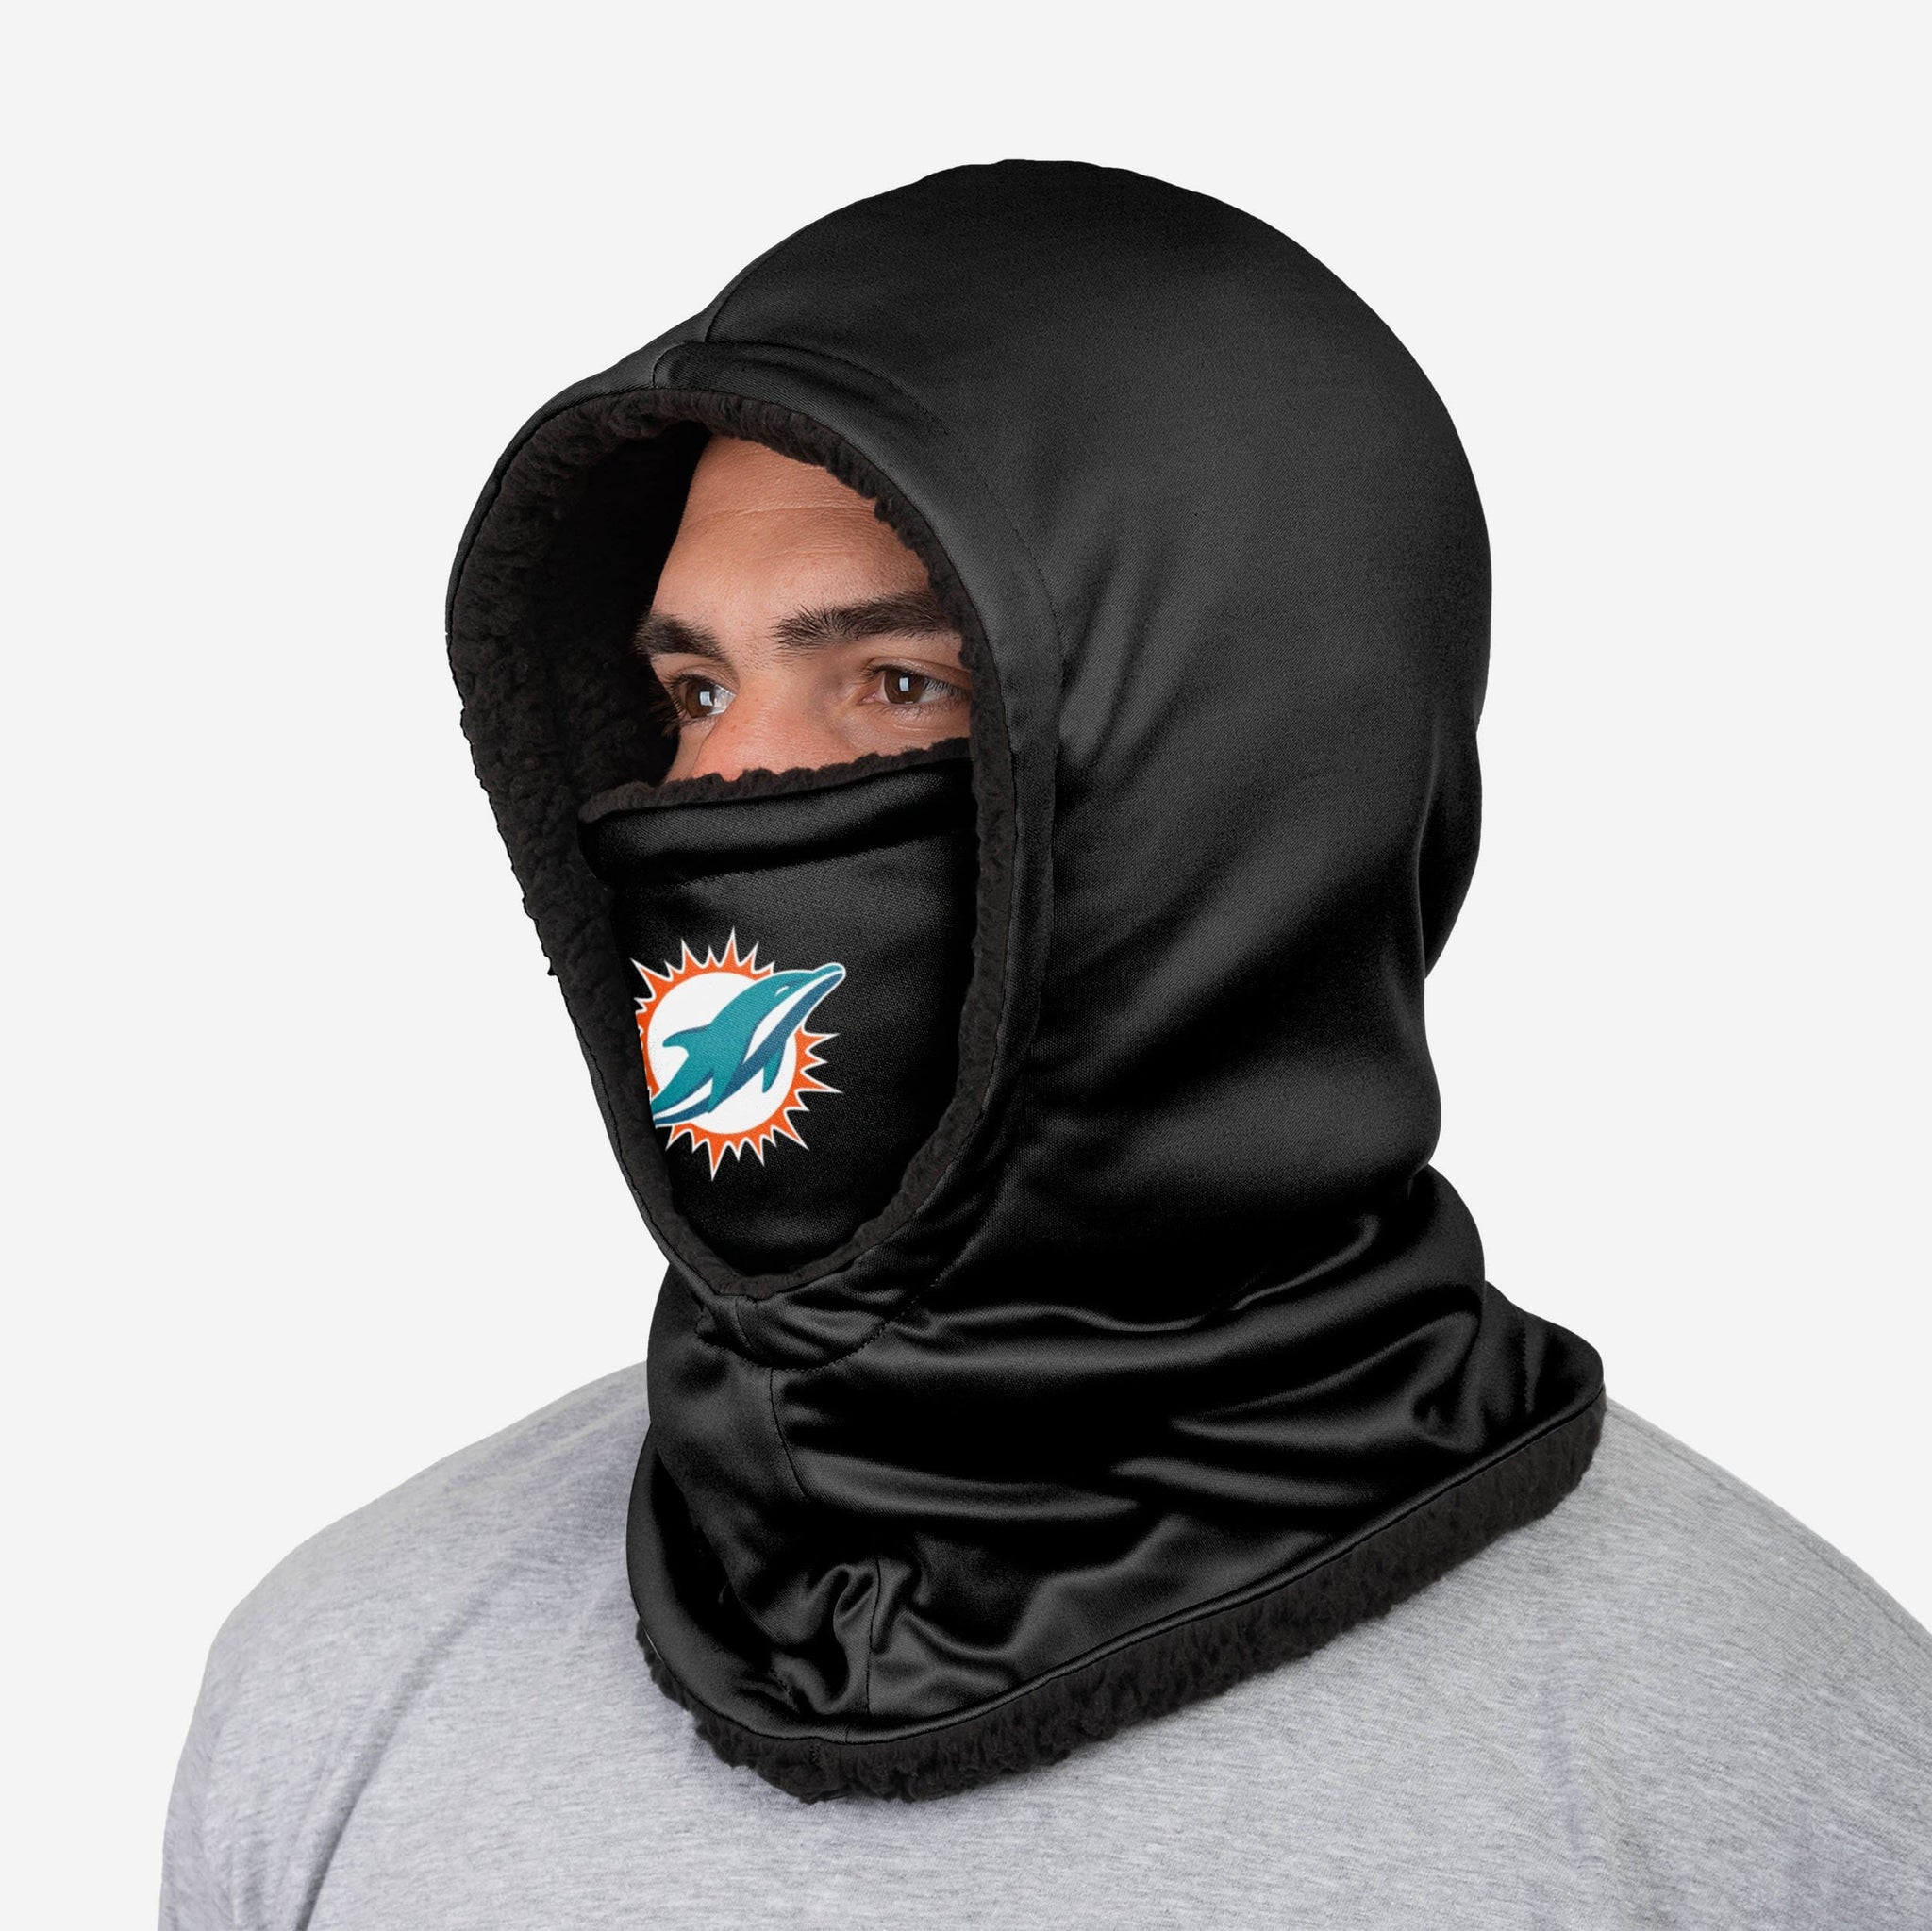 las vegas Raiders Fans Face Mask Adult Scarf Breathable Bandana Neck Gaiter